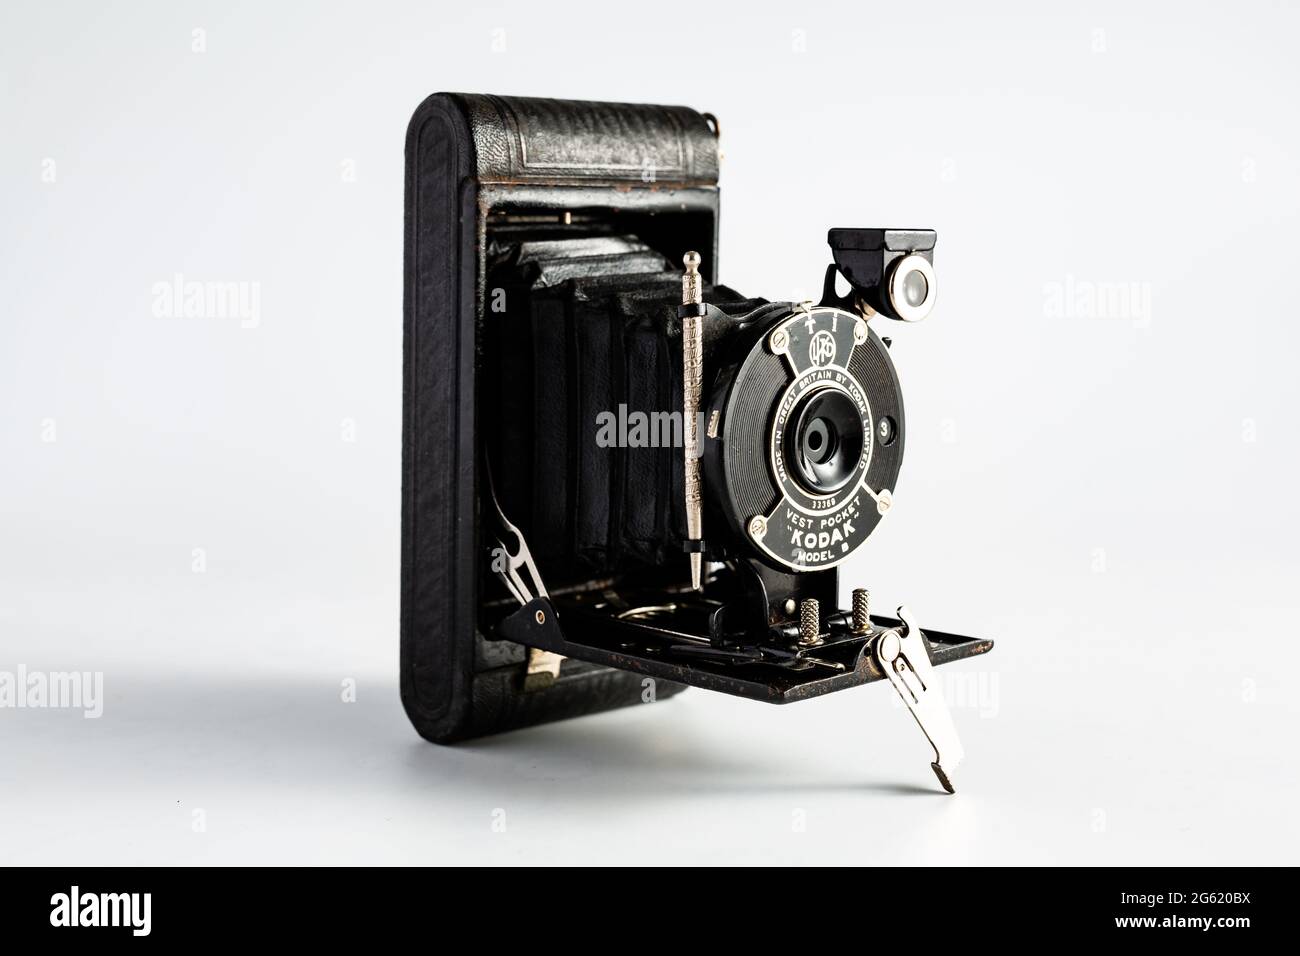 Kodak Vest Pocket Camera High Resolution Stock Photography and Images -  Alamy